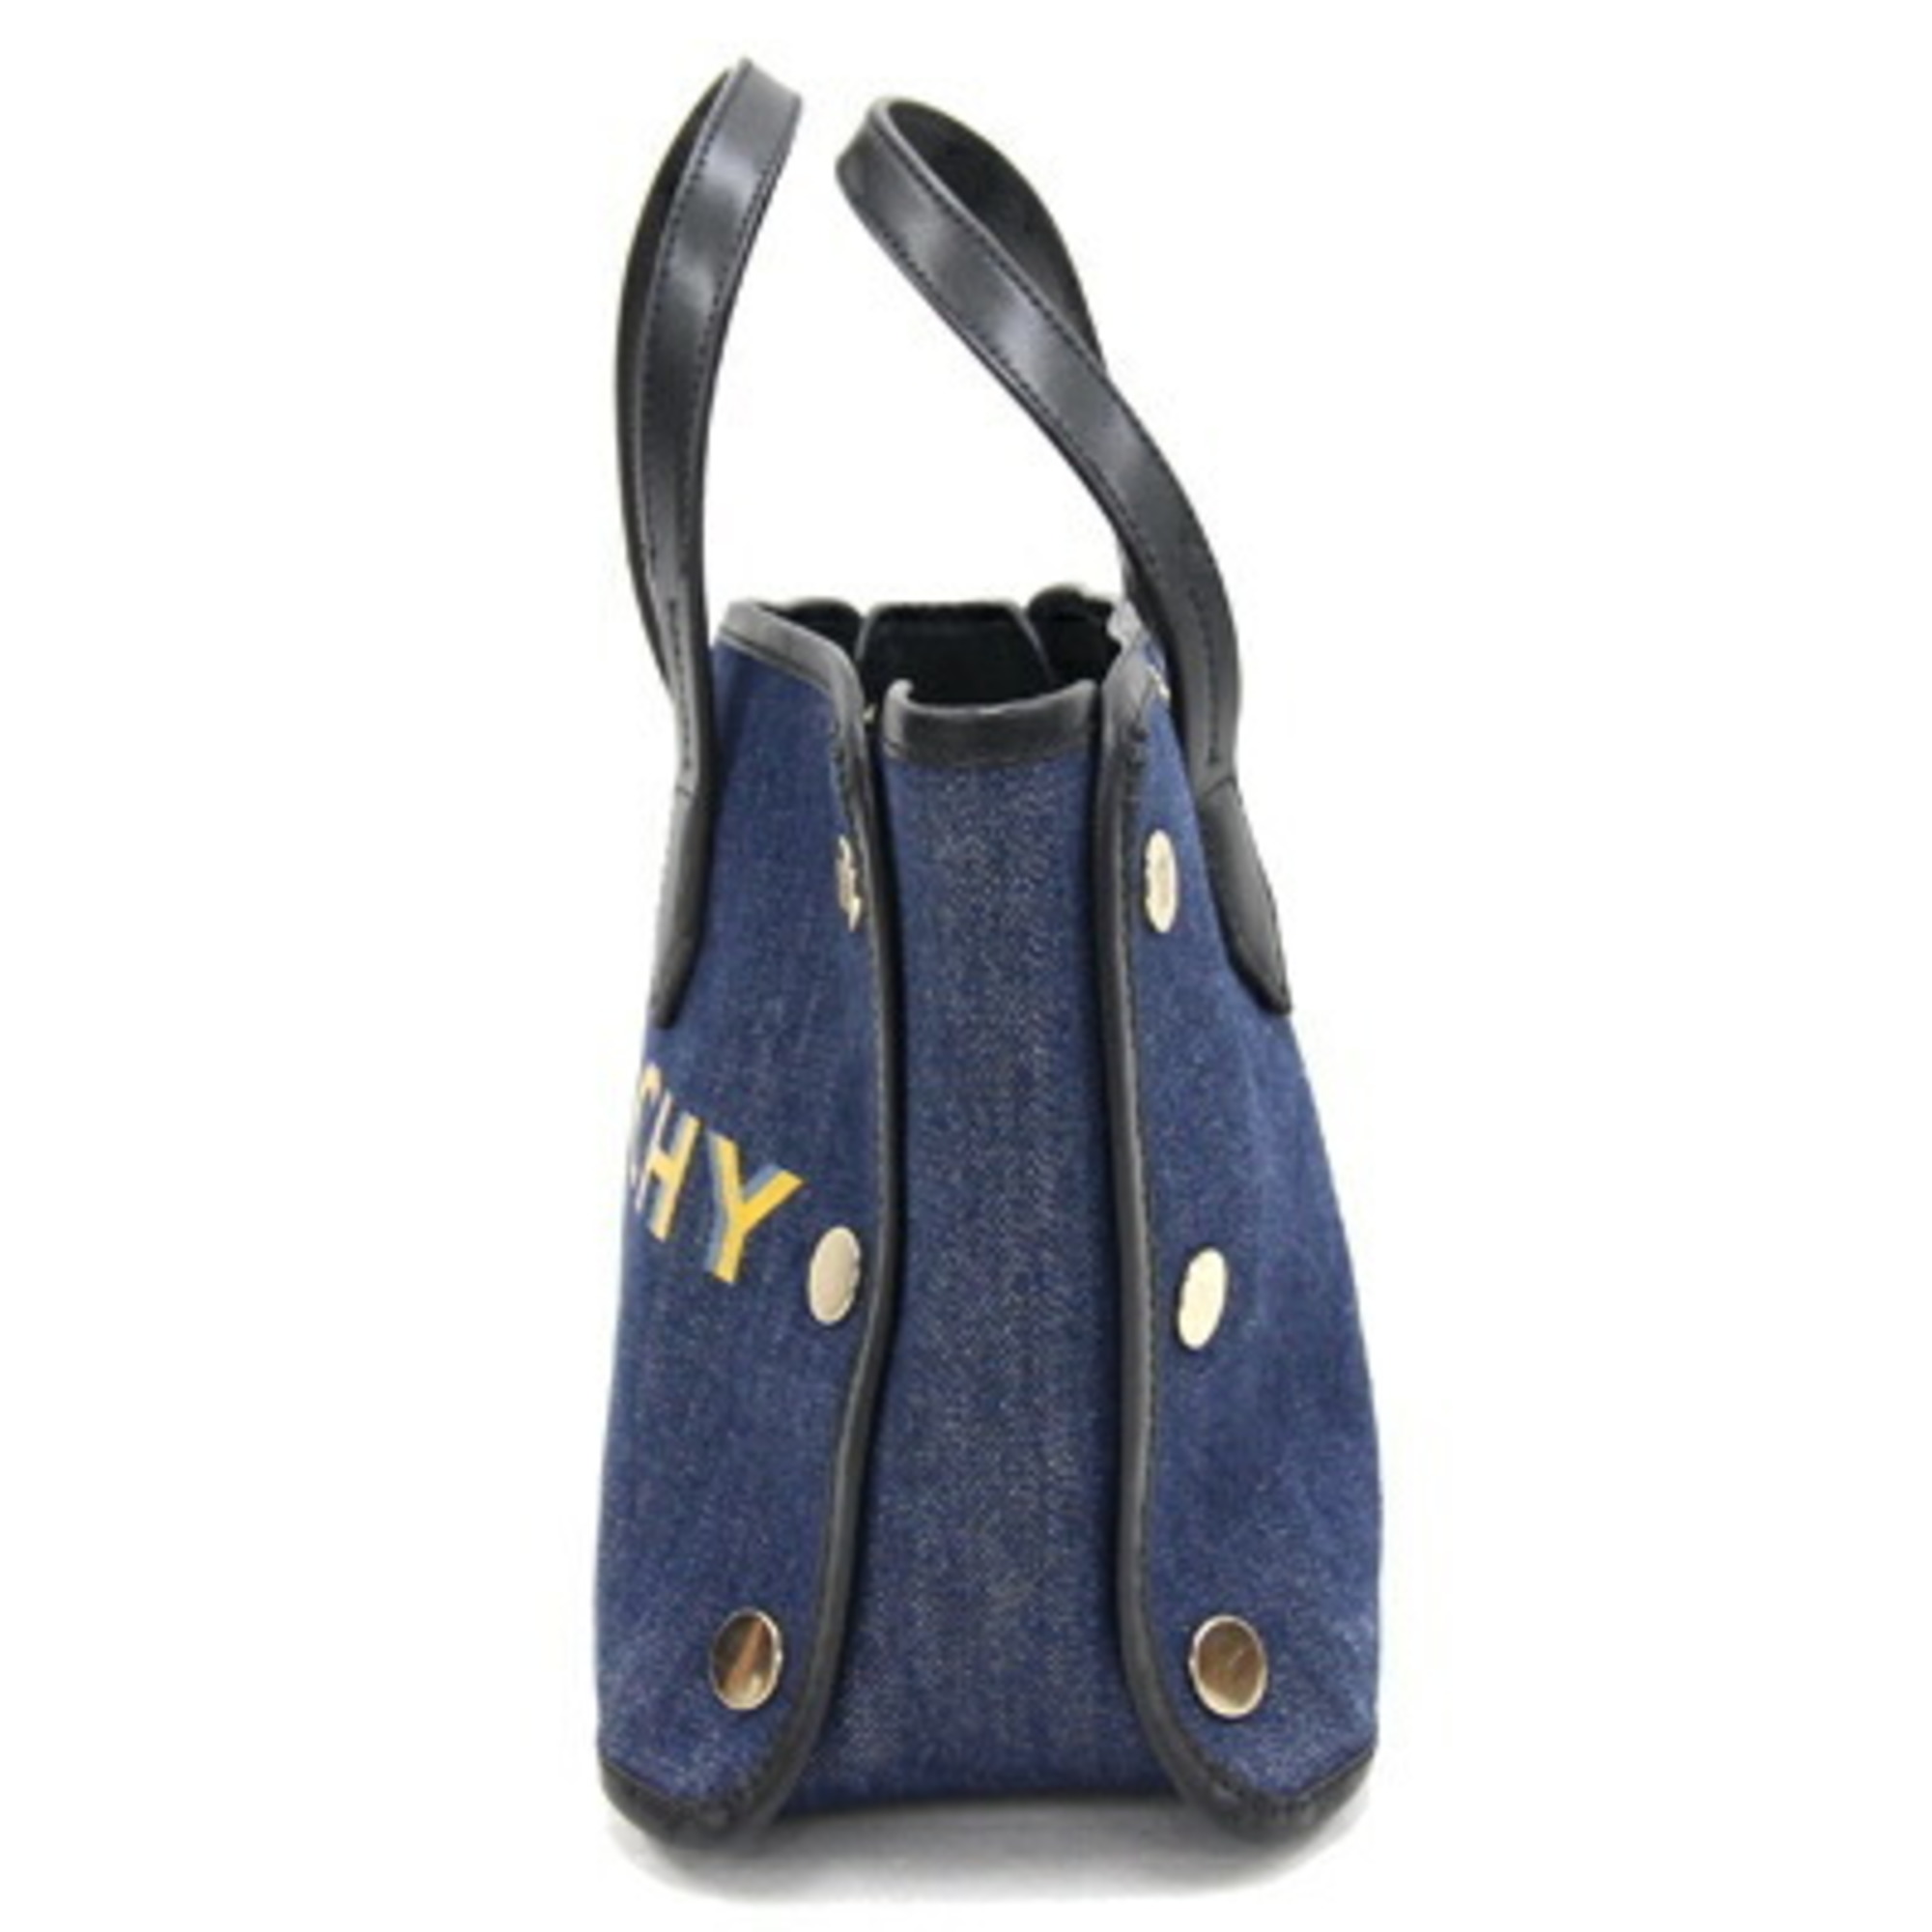 Givenchy Handbag Bond Shopper Tote BB50E5B10H Blue Black Leather Shoulder Bag Women's GIVENCHY